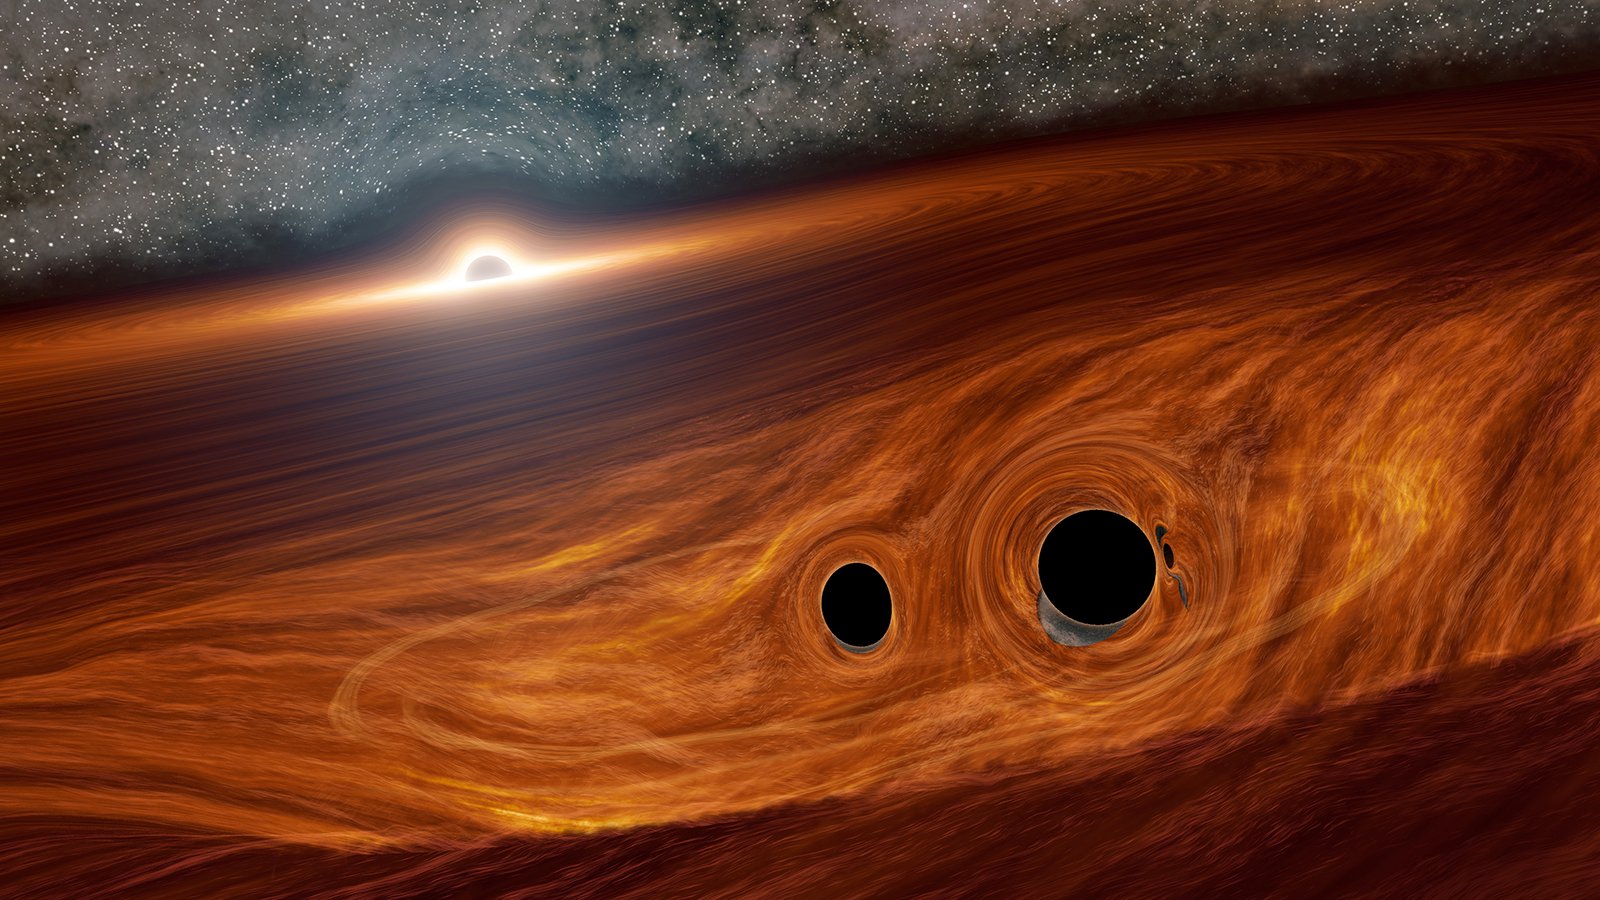 black hole merger with supermassive black hole